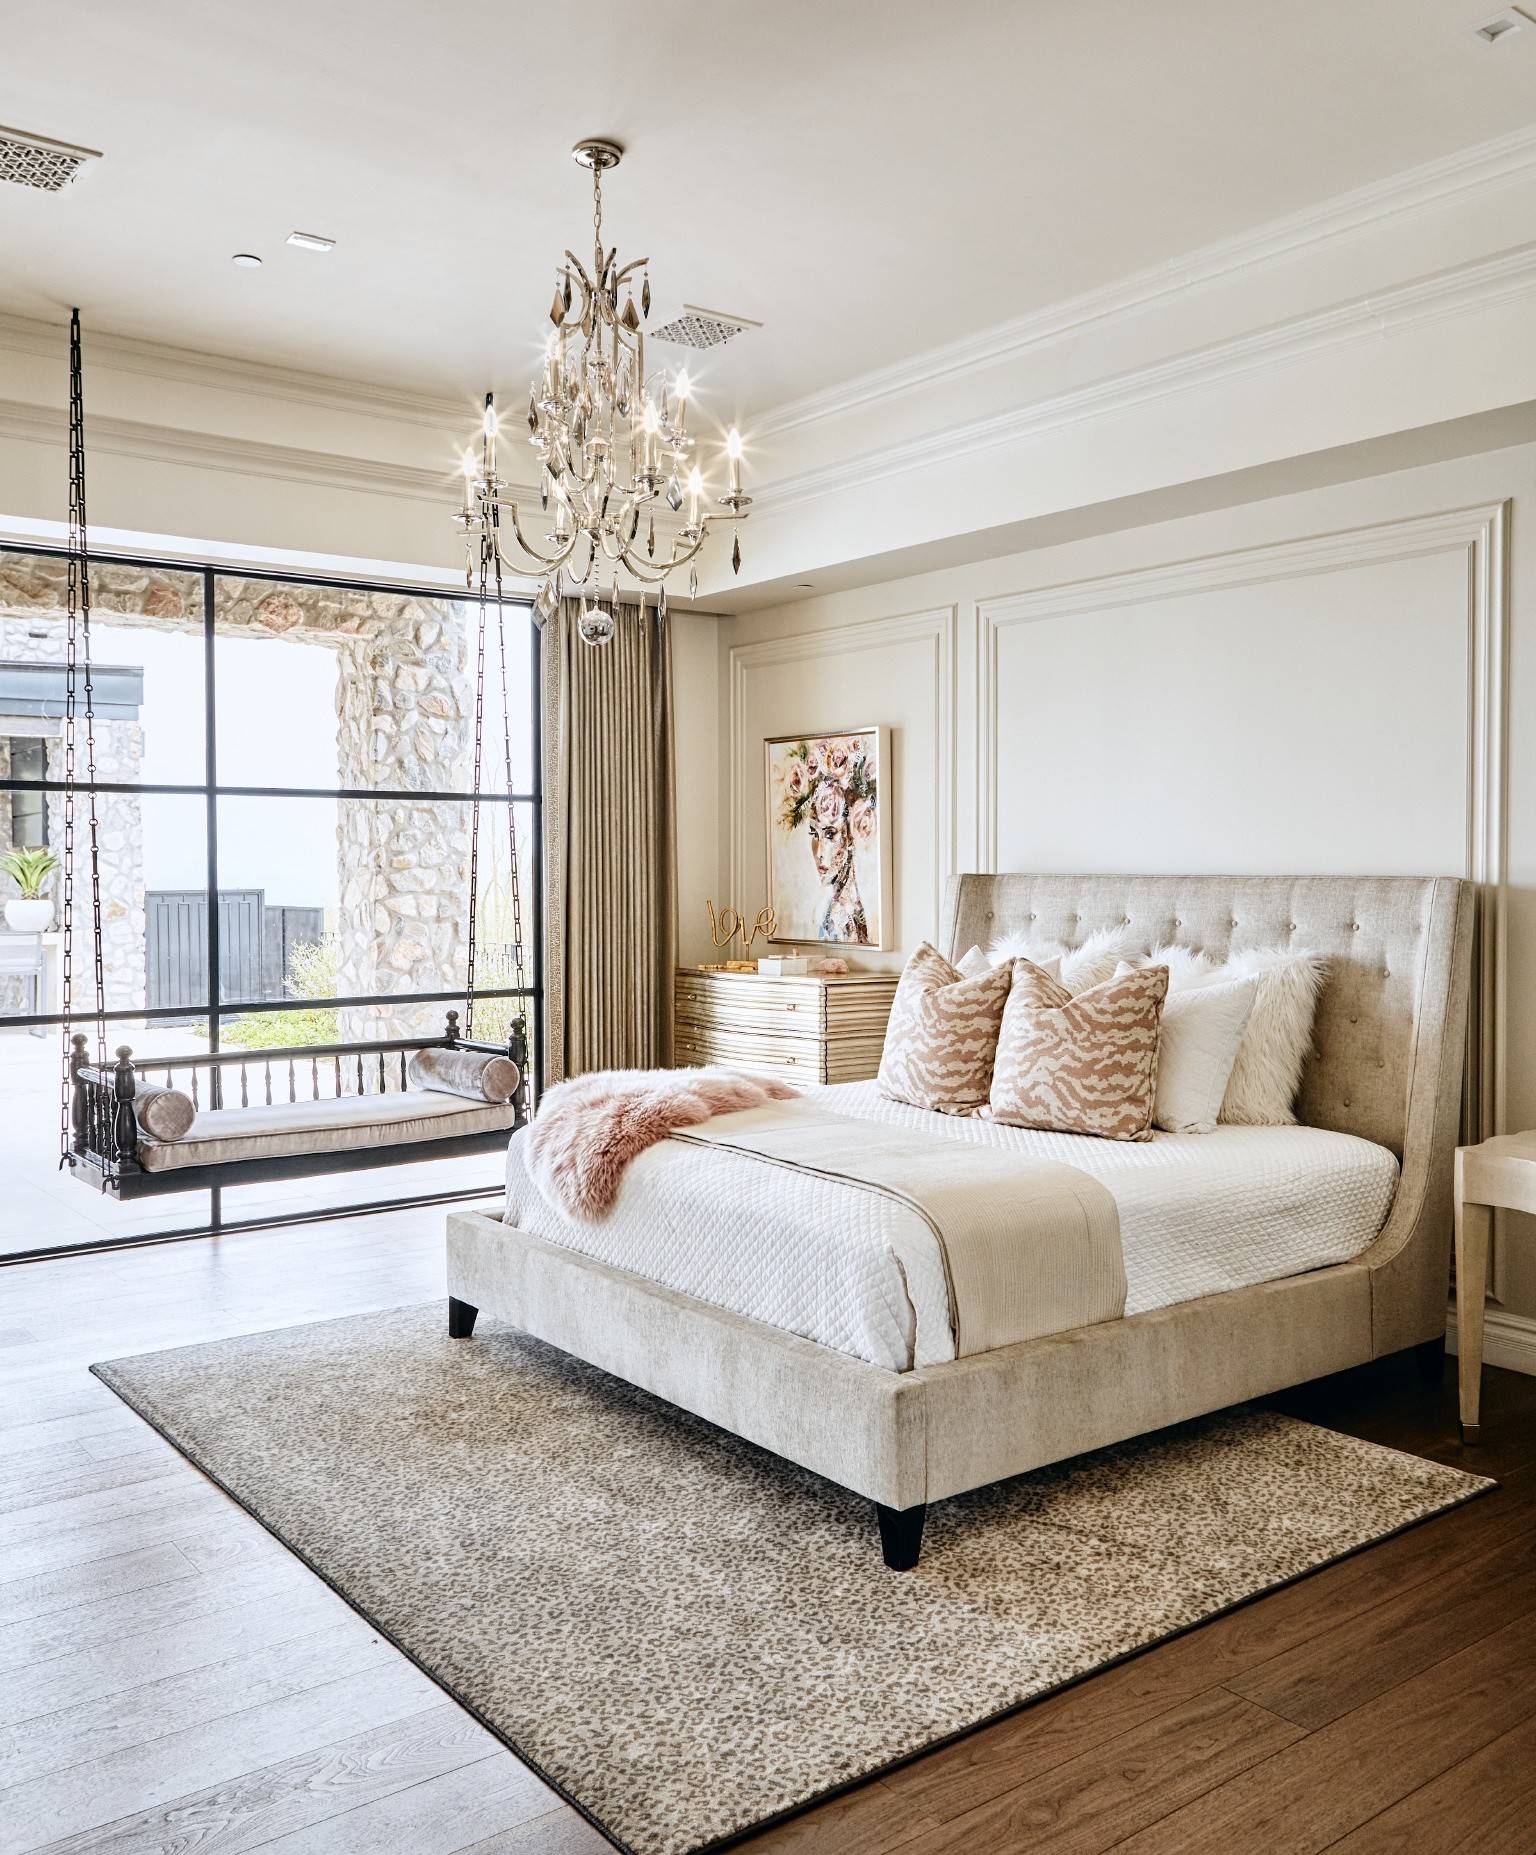 75 beautiful beige bedroom pictures & ideas - july, 2020 | houzz